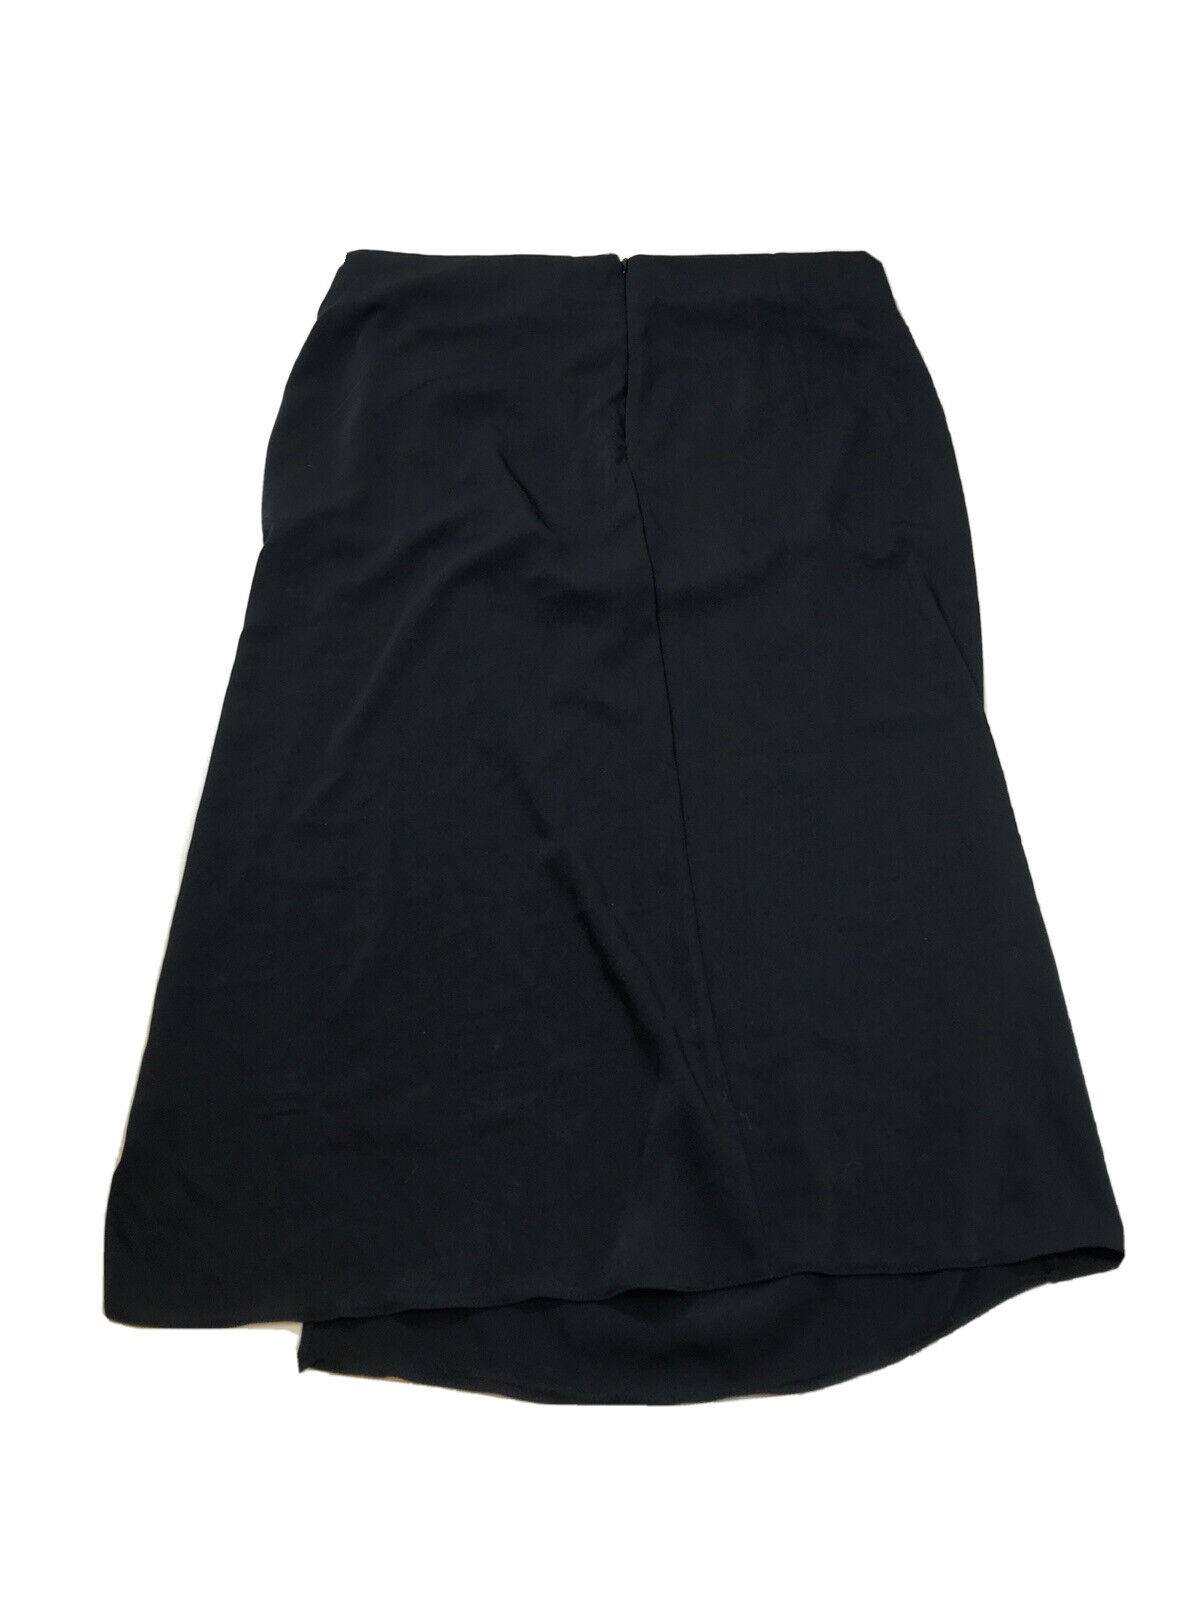 NEW Mango MNG Women's Black Long Side Slit Falda Skirt - XXL